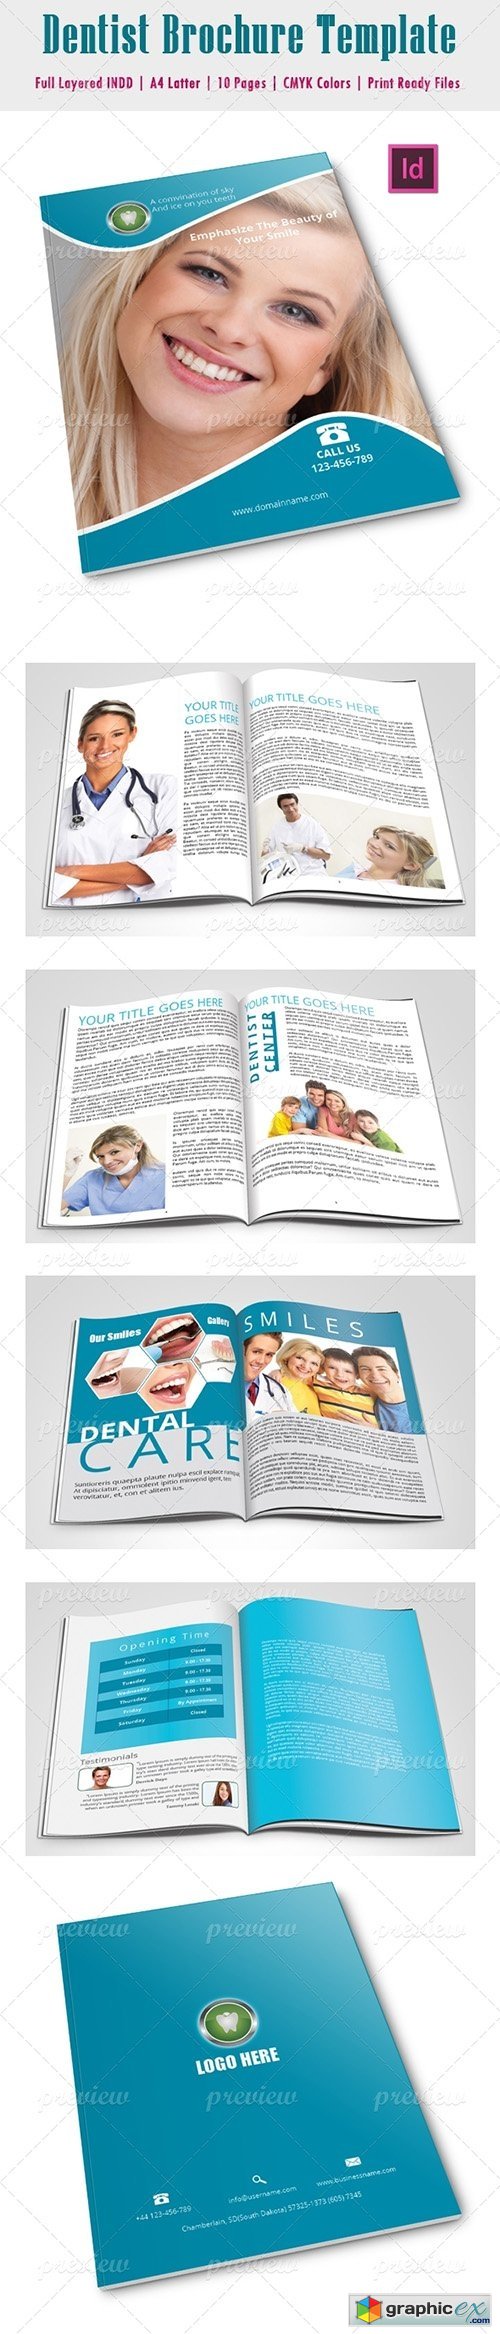 CodeGrape Dentist Brochure Template 2059